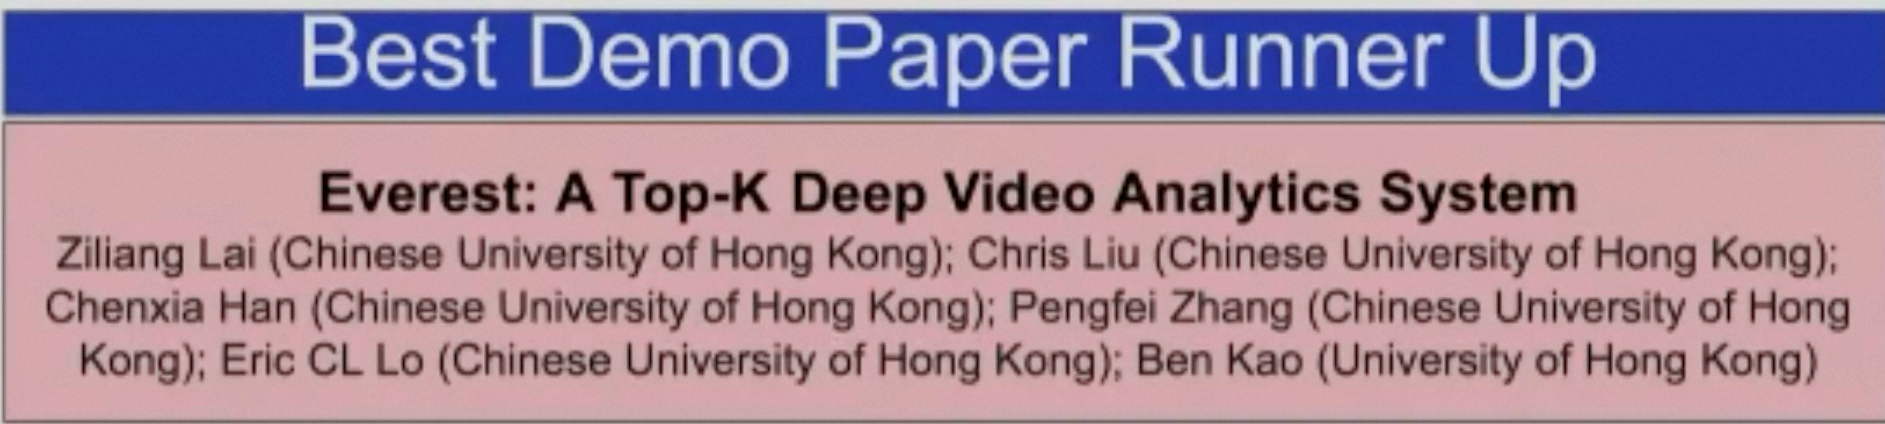 Best Demo Paper Runner Up Everest: A Top-K Deep Video Analytics System